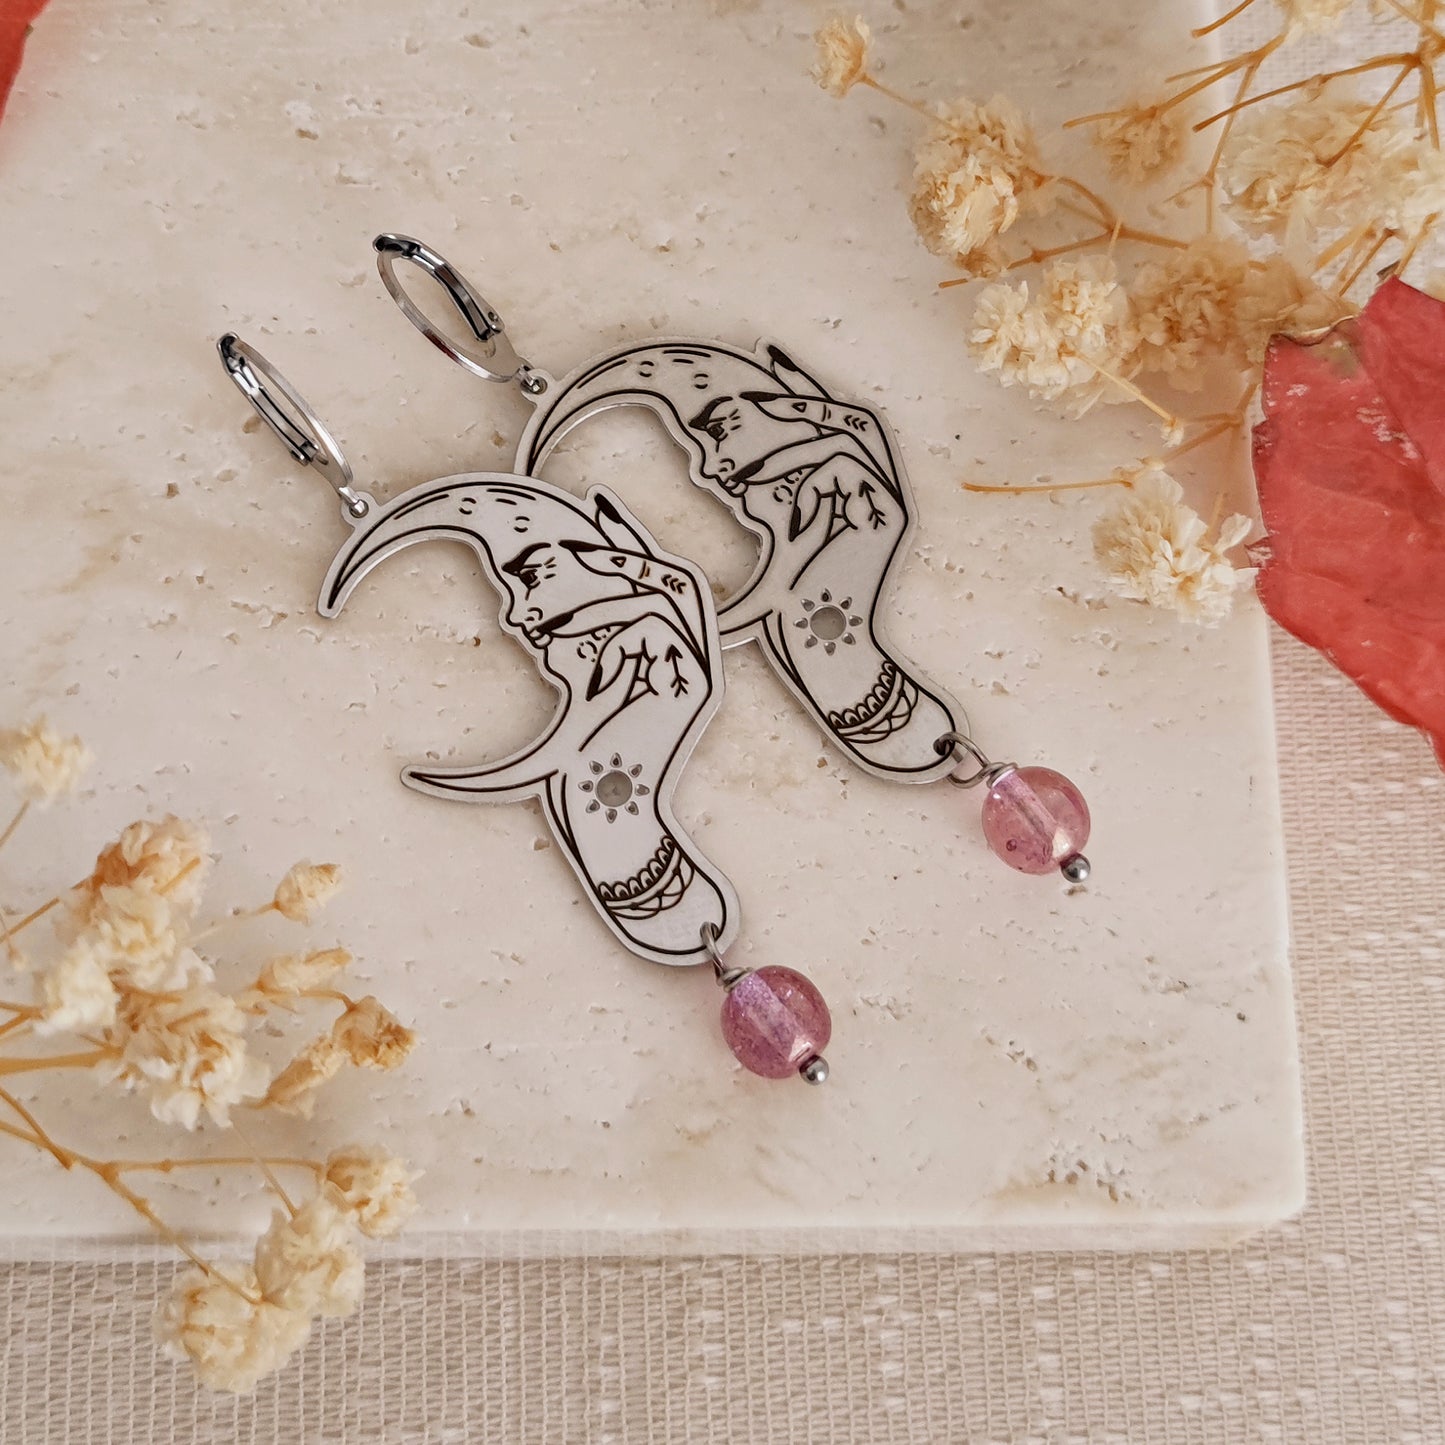  "Fortune Teller" chandelier earrings